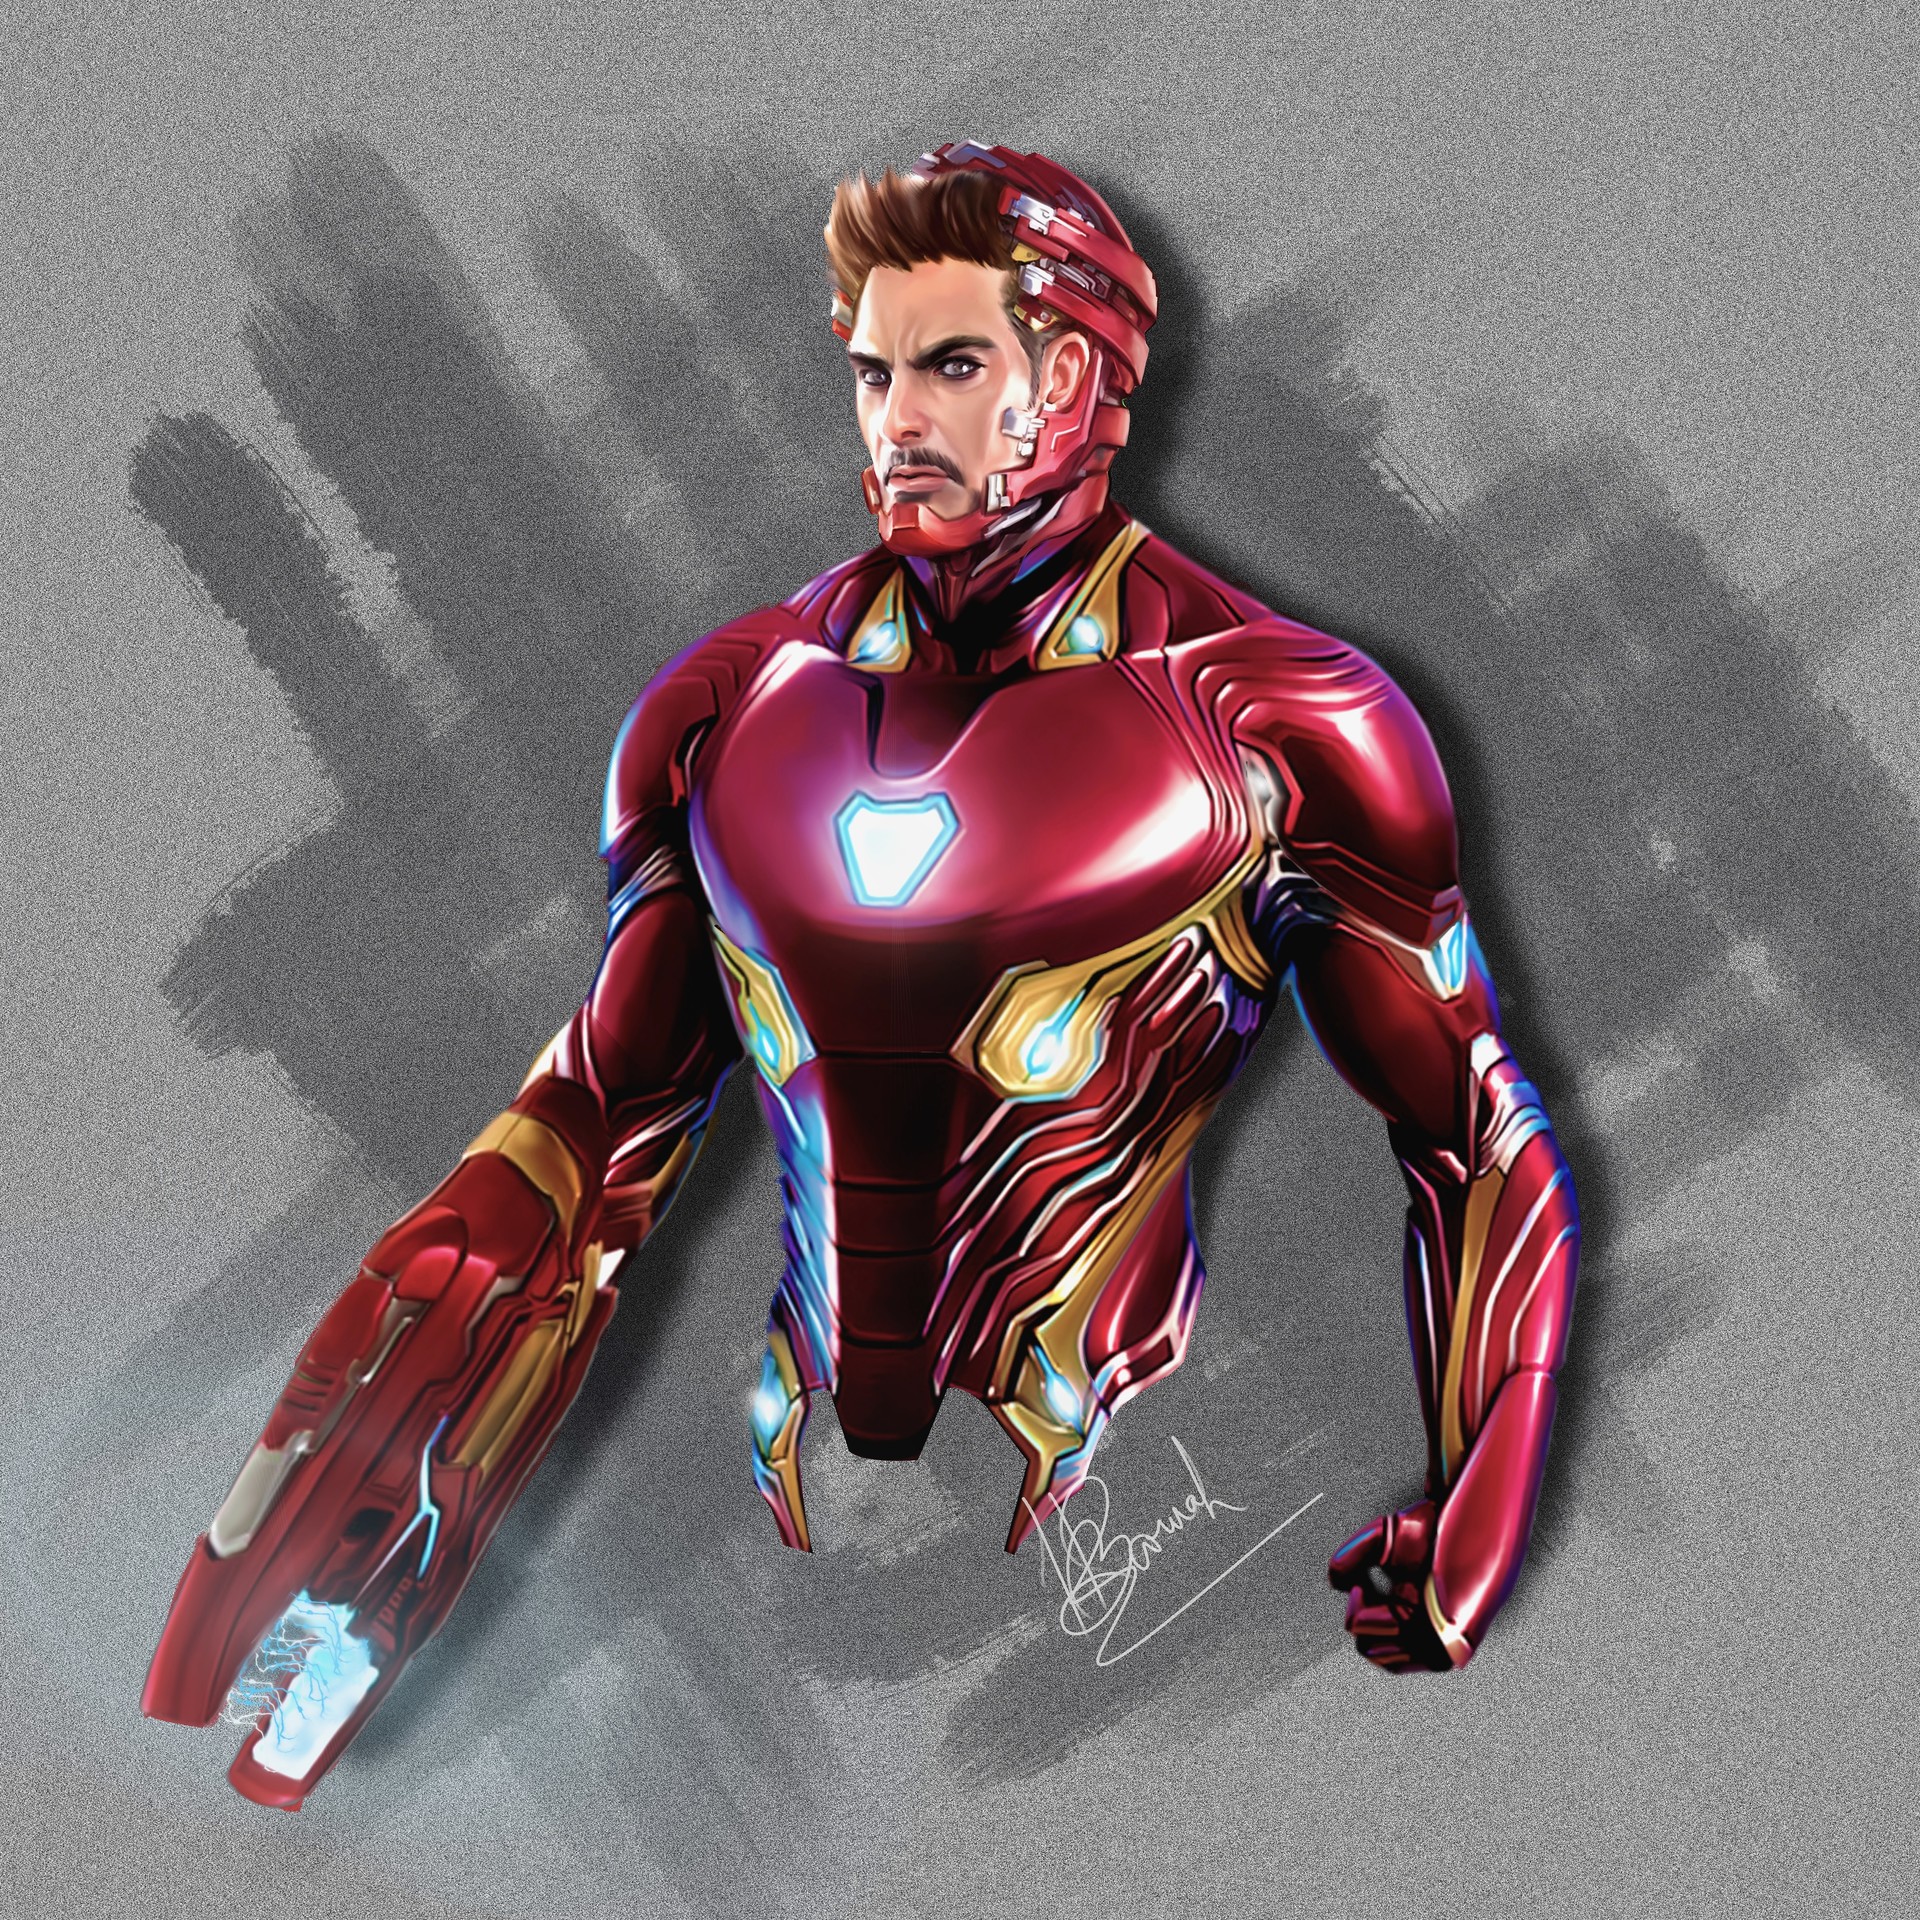 iron man 50 suit